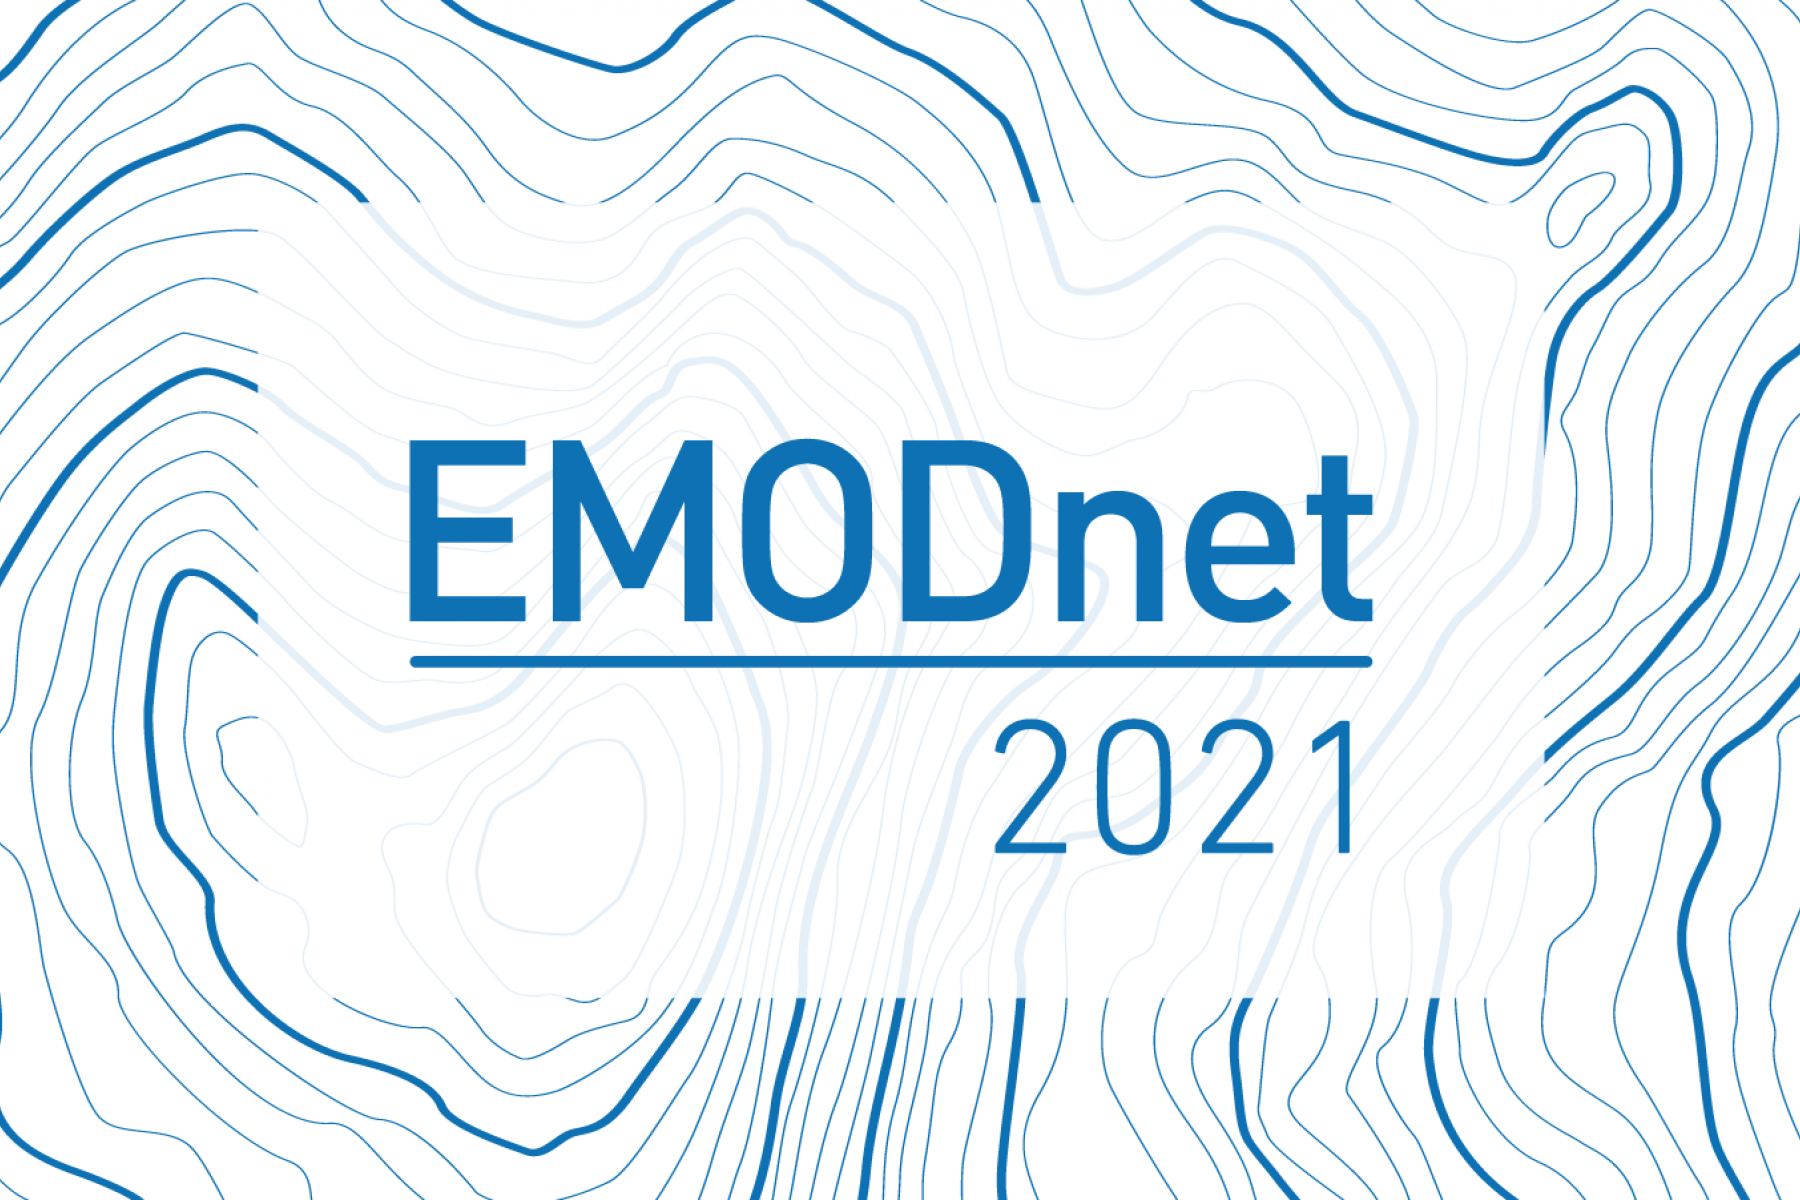 EMODnet New Year 2021